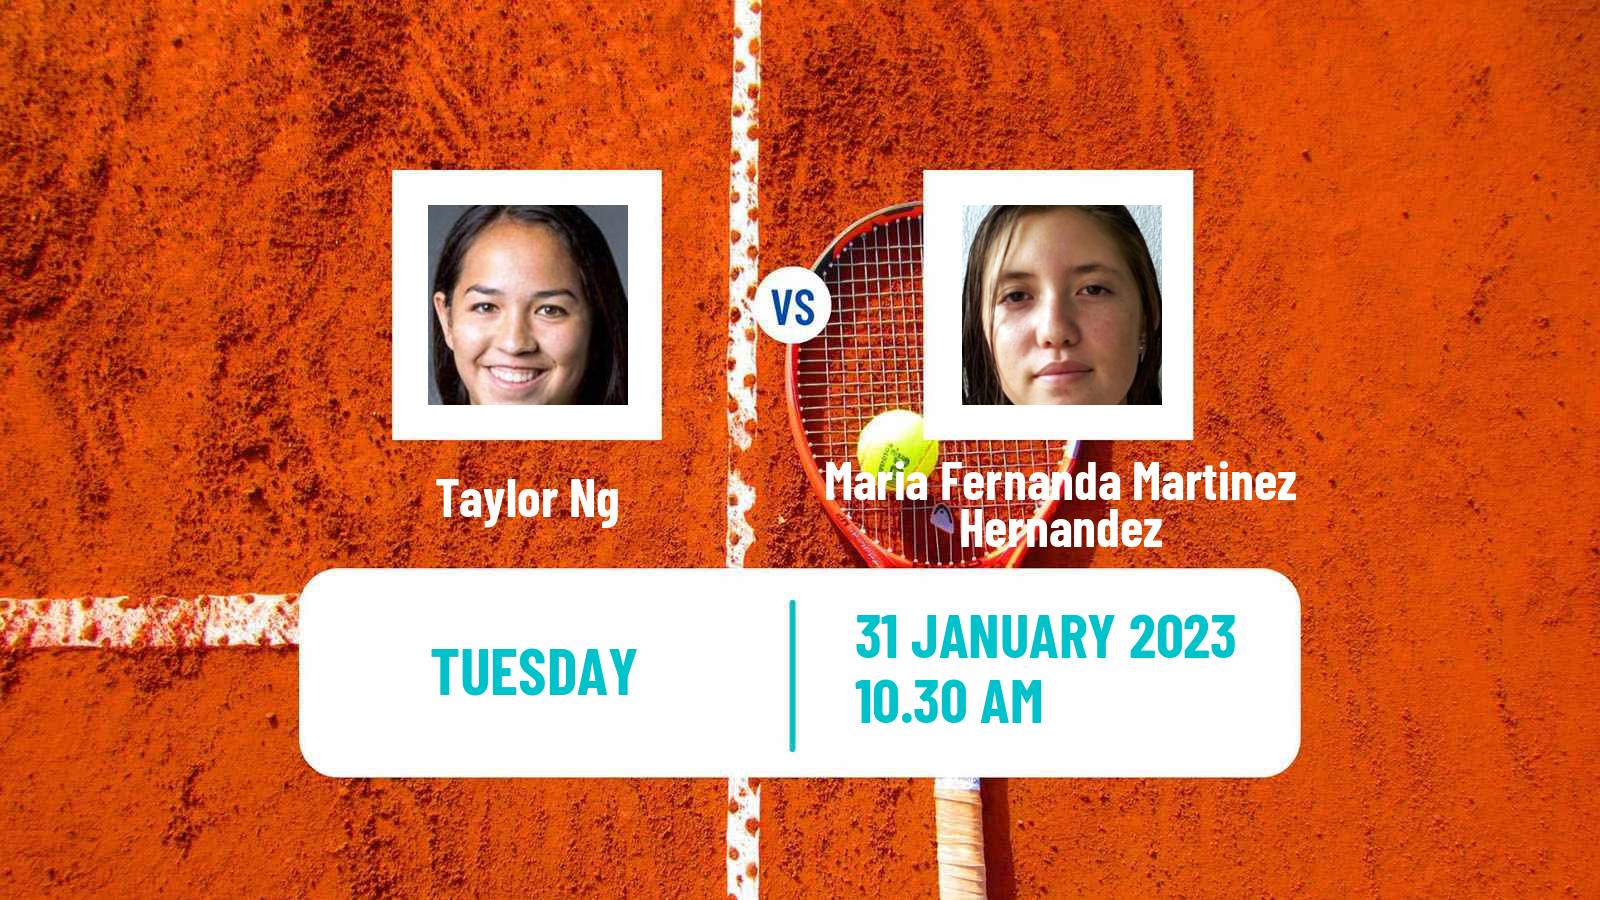 Tennis ITF Tournaments Taylor Ng - Maria Fernanda Martinez Hernandez